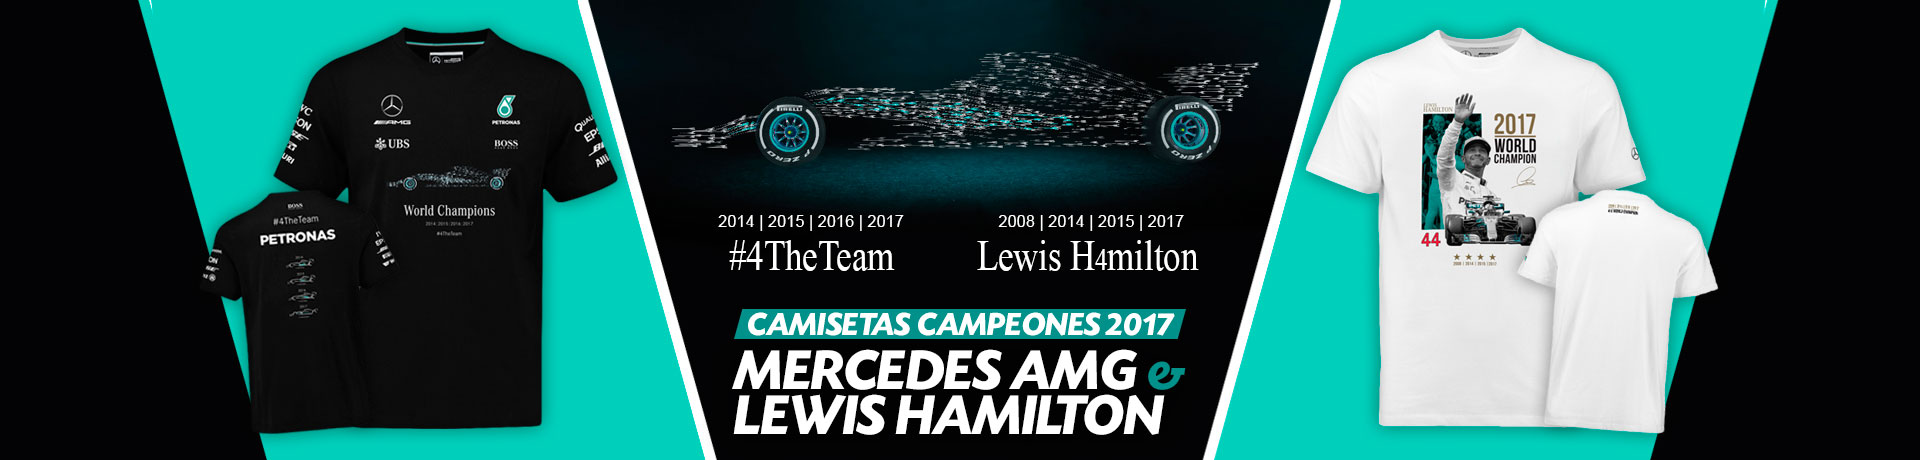 Camiseta oficial Mercedes y Lewis Hamilton